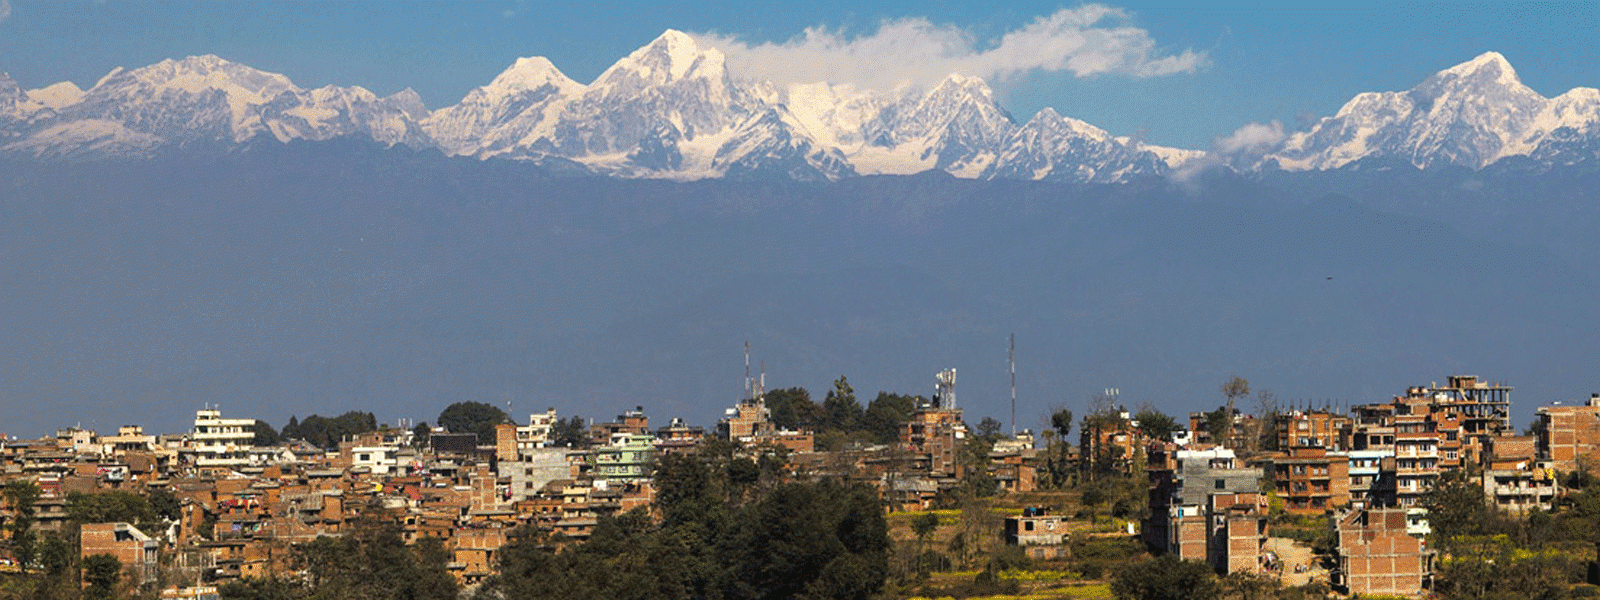 Sightseeing Tour in Kathmandu Valley